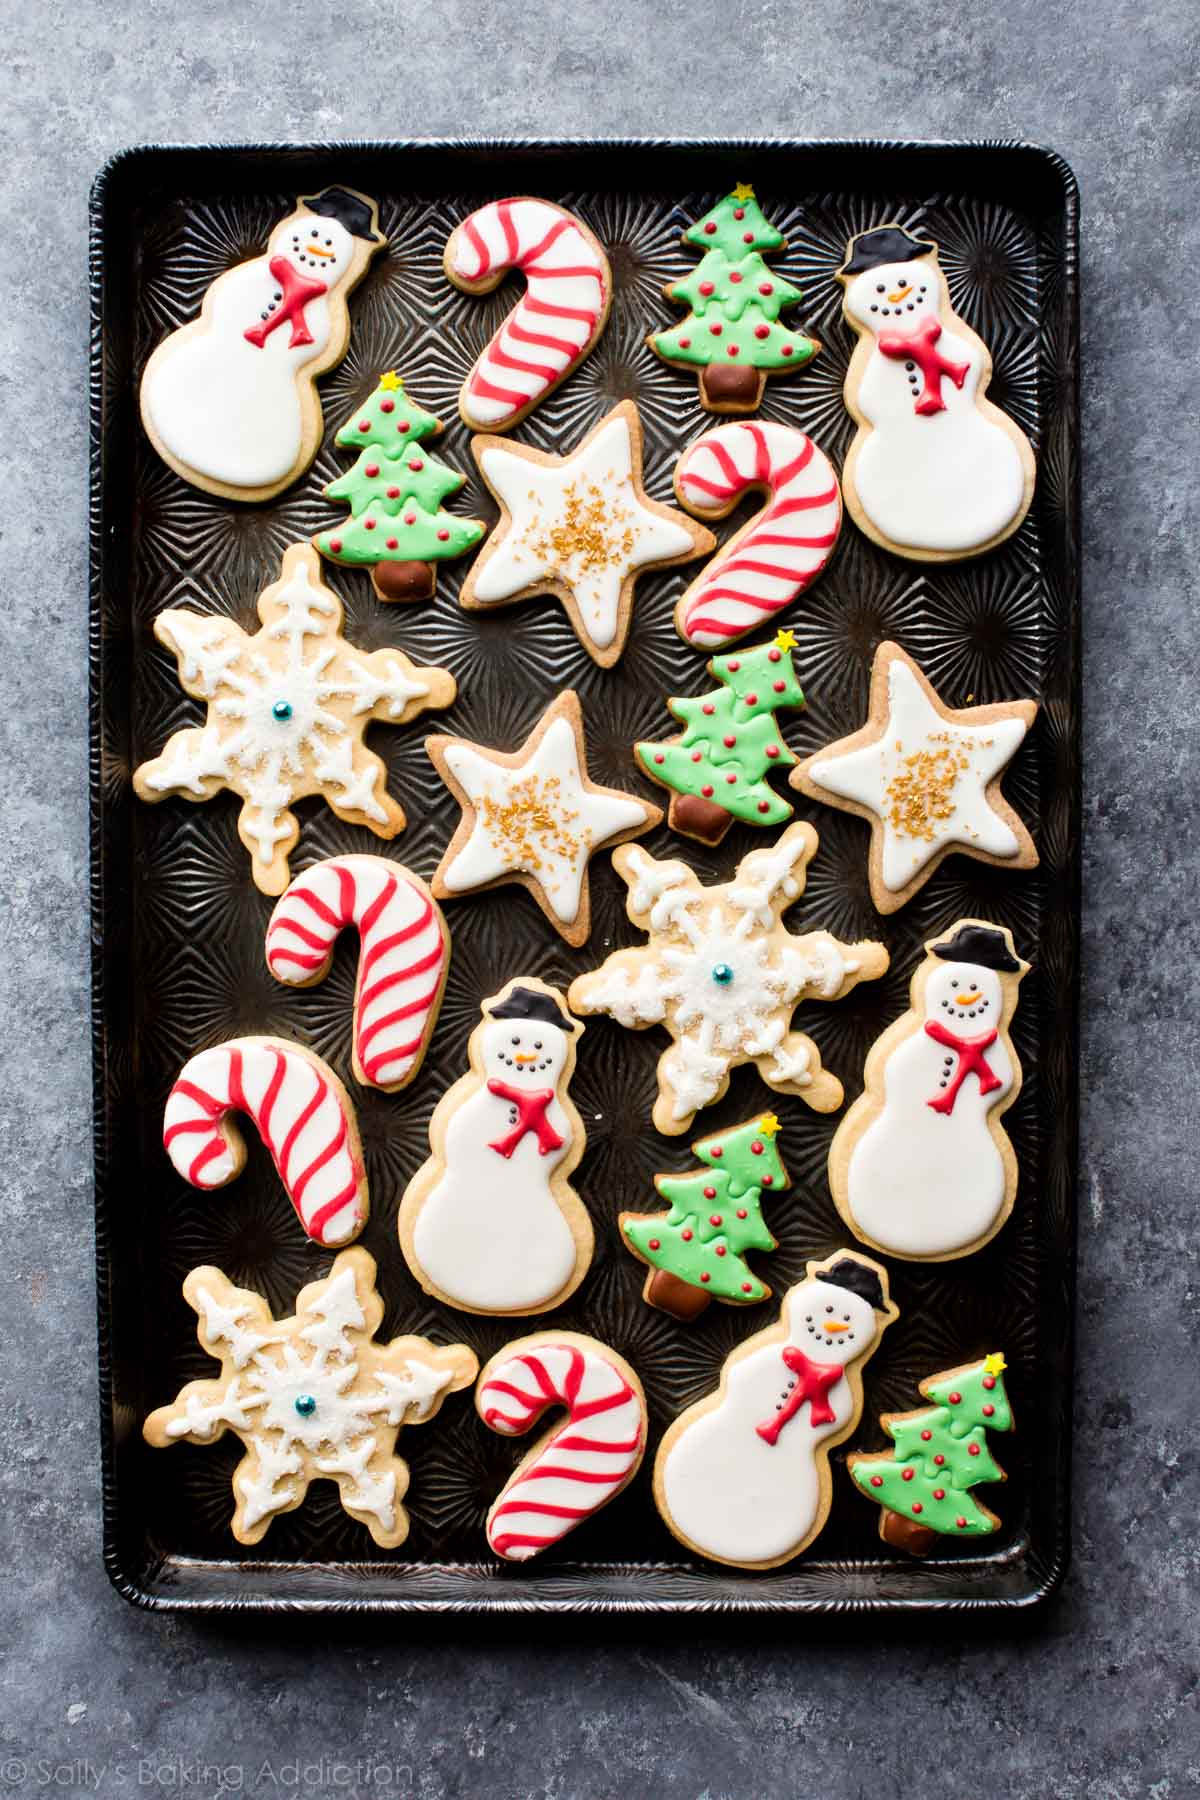 Decorate Christmas Cookies
 1 Sugar Cookie Dough 5 Ways to Decorate Sallys Baking